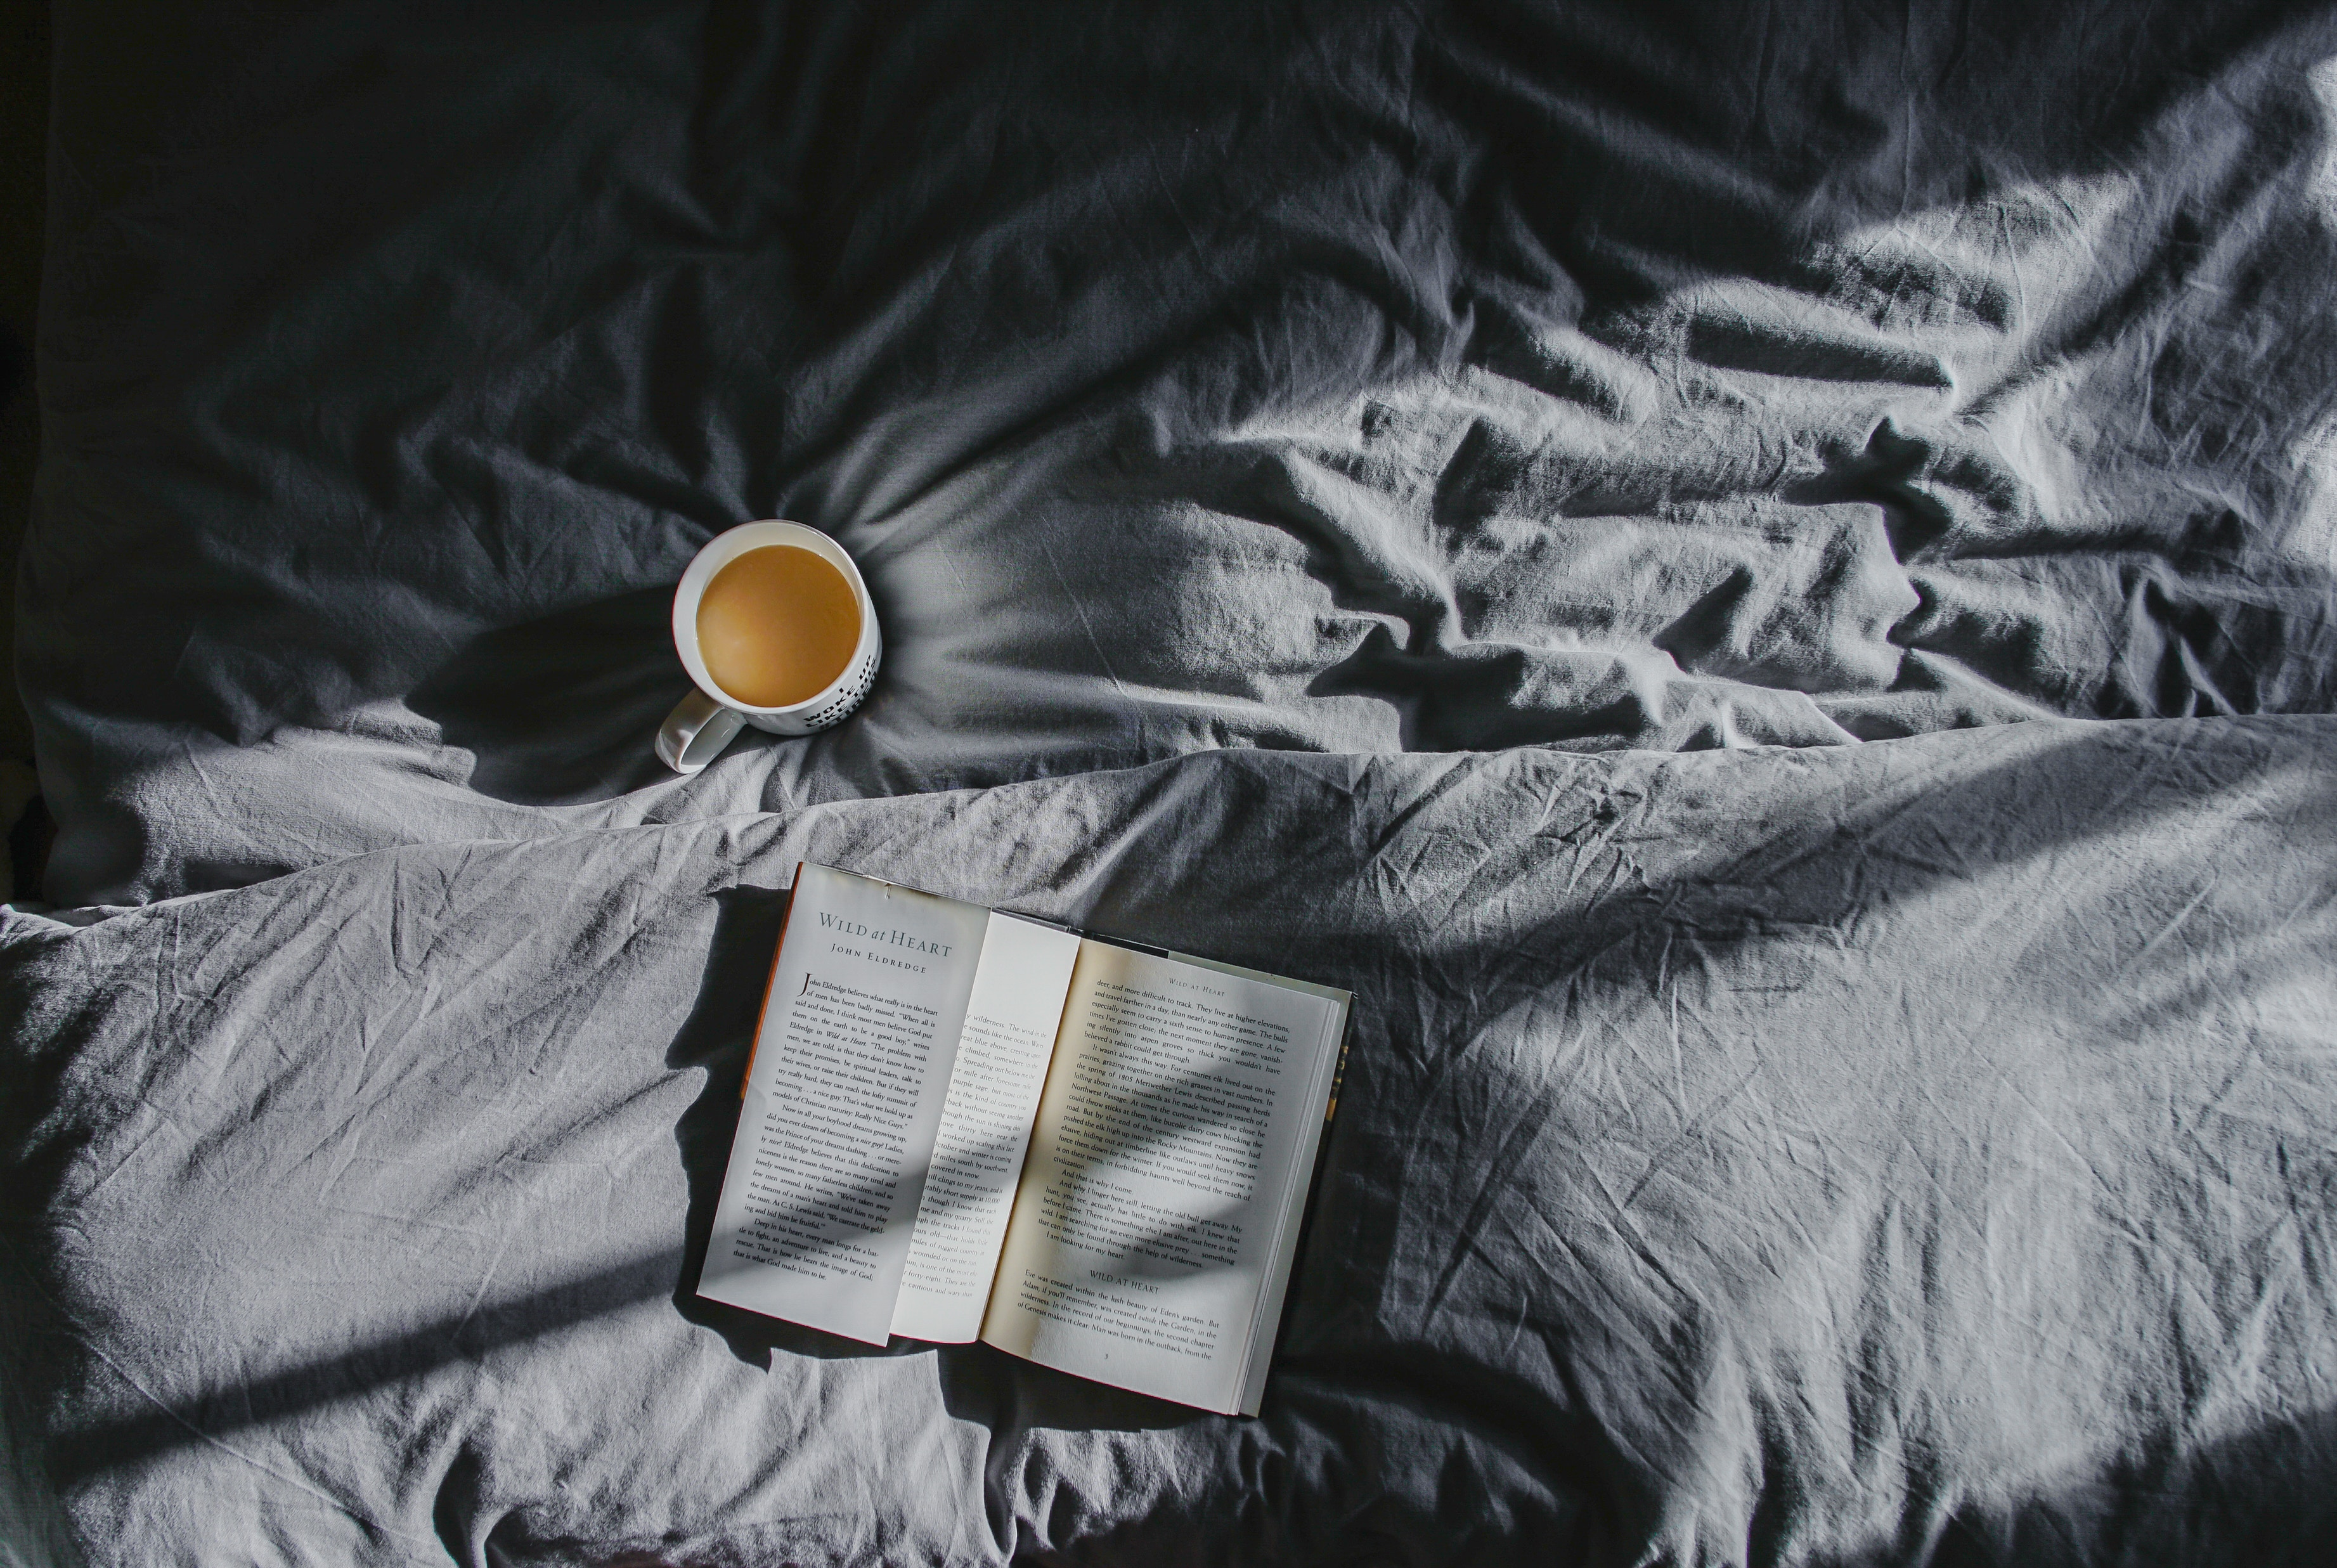 coffee, miscellaneous, miscellanea, shadow, book, bed